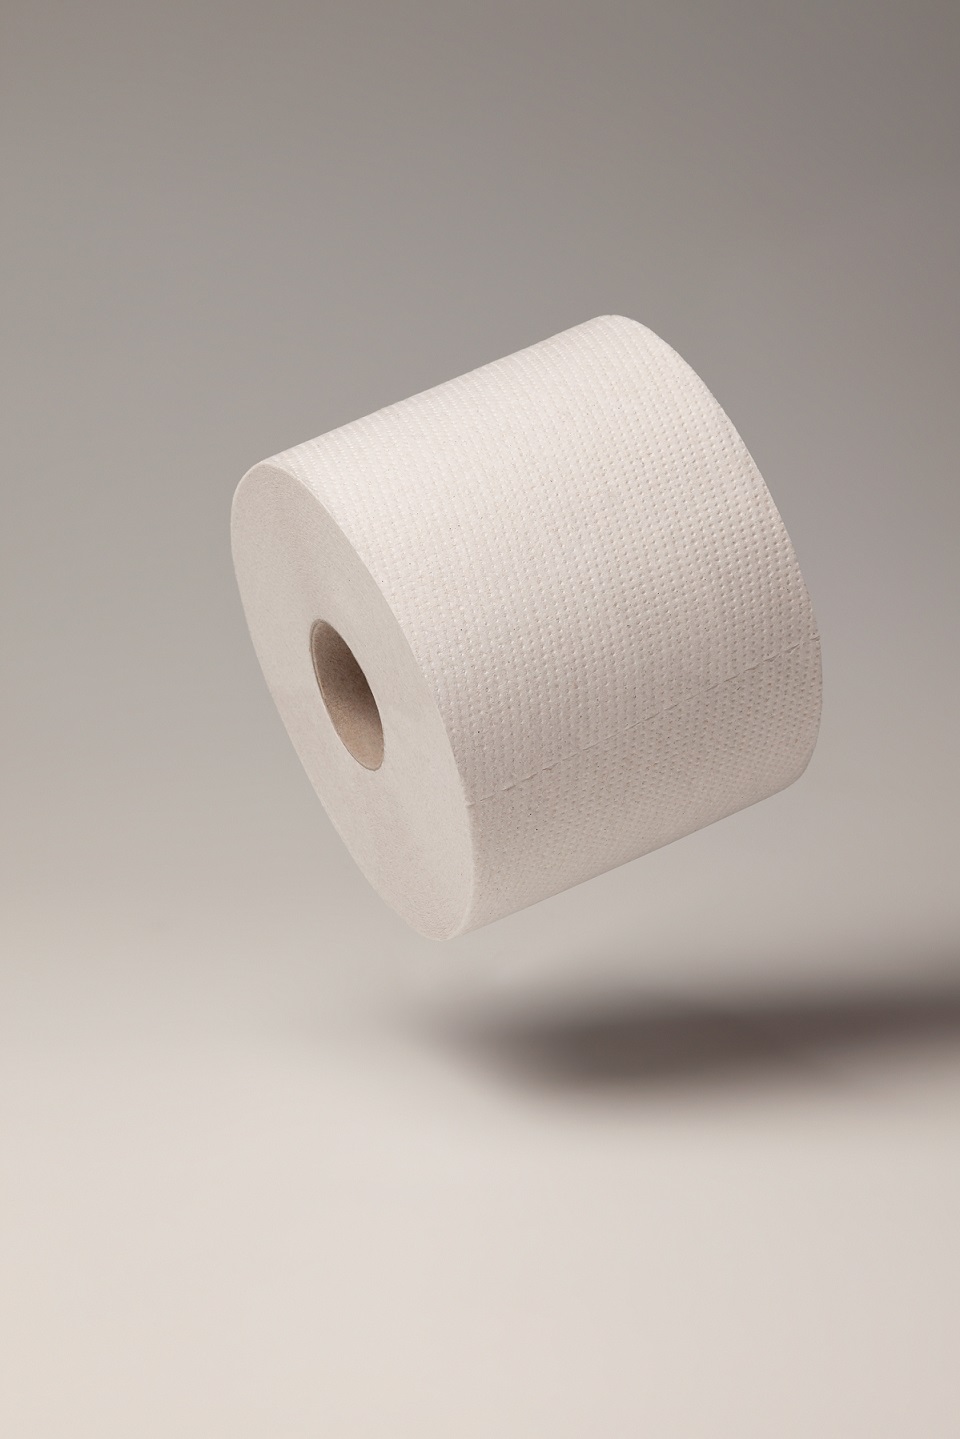 Green Hygiene® ROLF Toilettenpapier Kleinrolle, 2-lagig